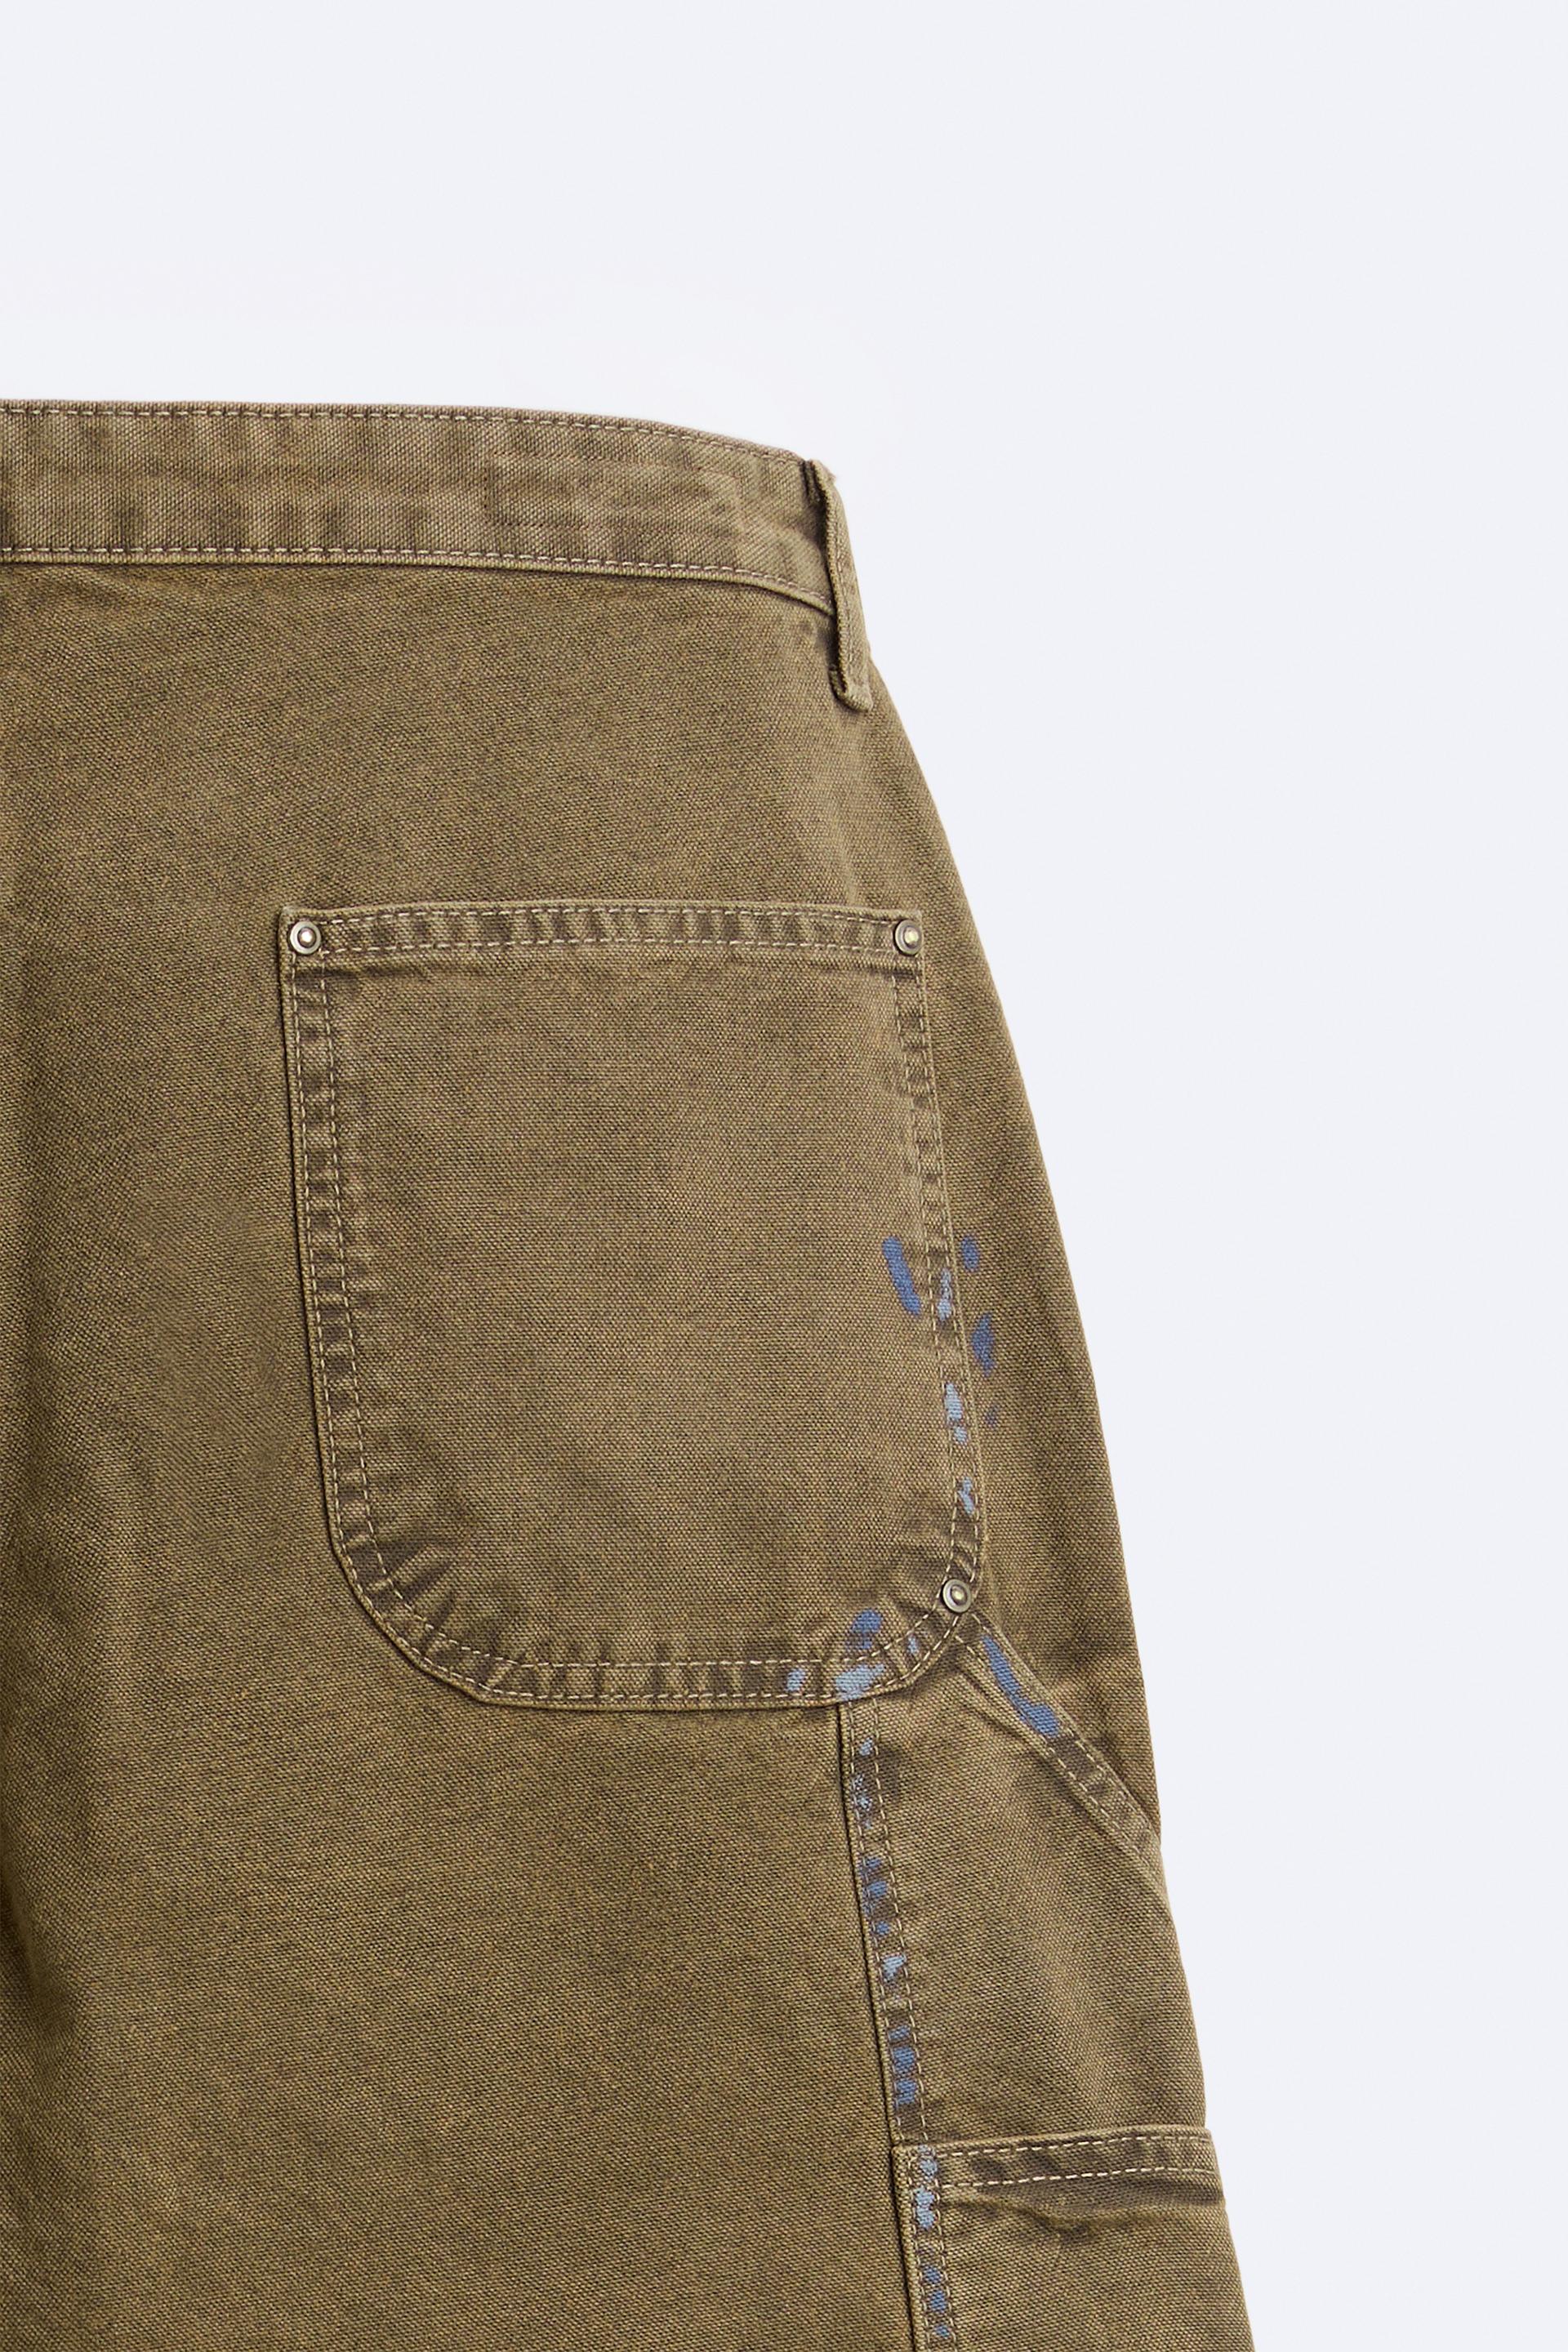 NEW NWT Basic Editions Carpenter Khaki Tint 8 S Jeans Vintage KMart 2011  POCKETS